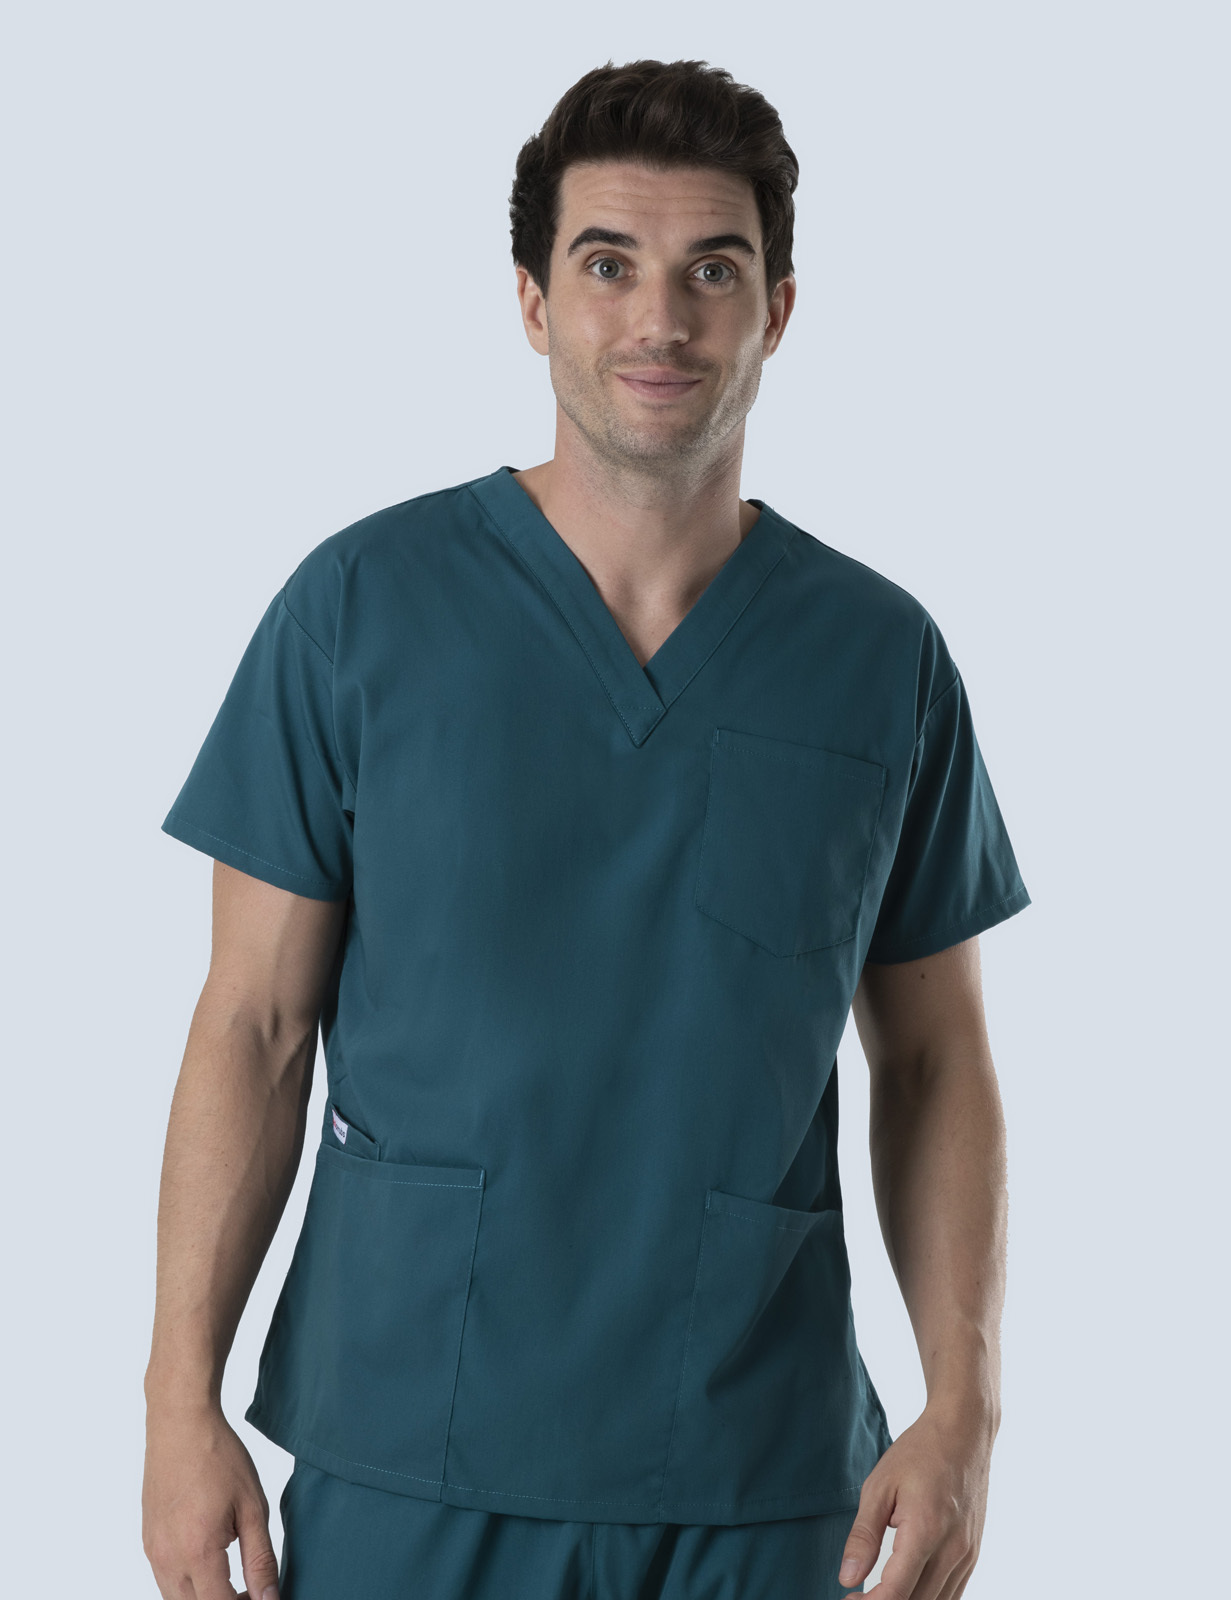 Biloela Hospital Healthcare Department Uniform Set Bundle (4 Pocket Top and Cargo pants in Caribbean incl Logos)